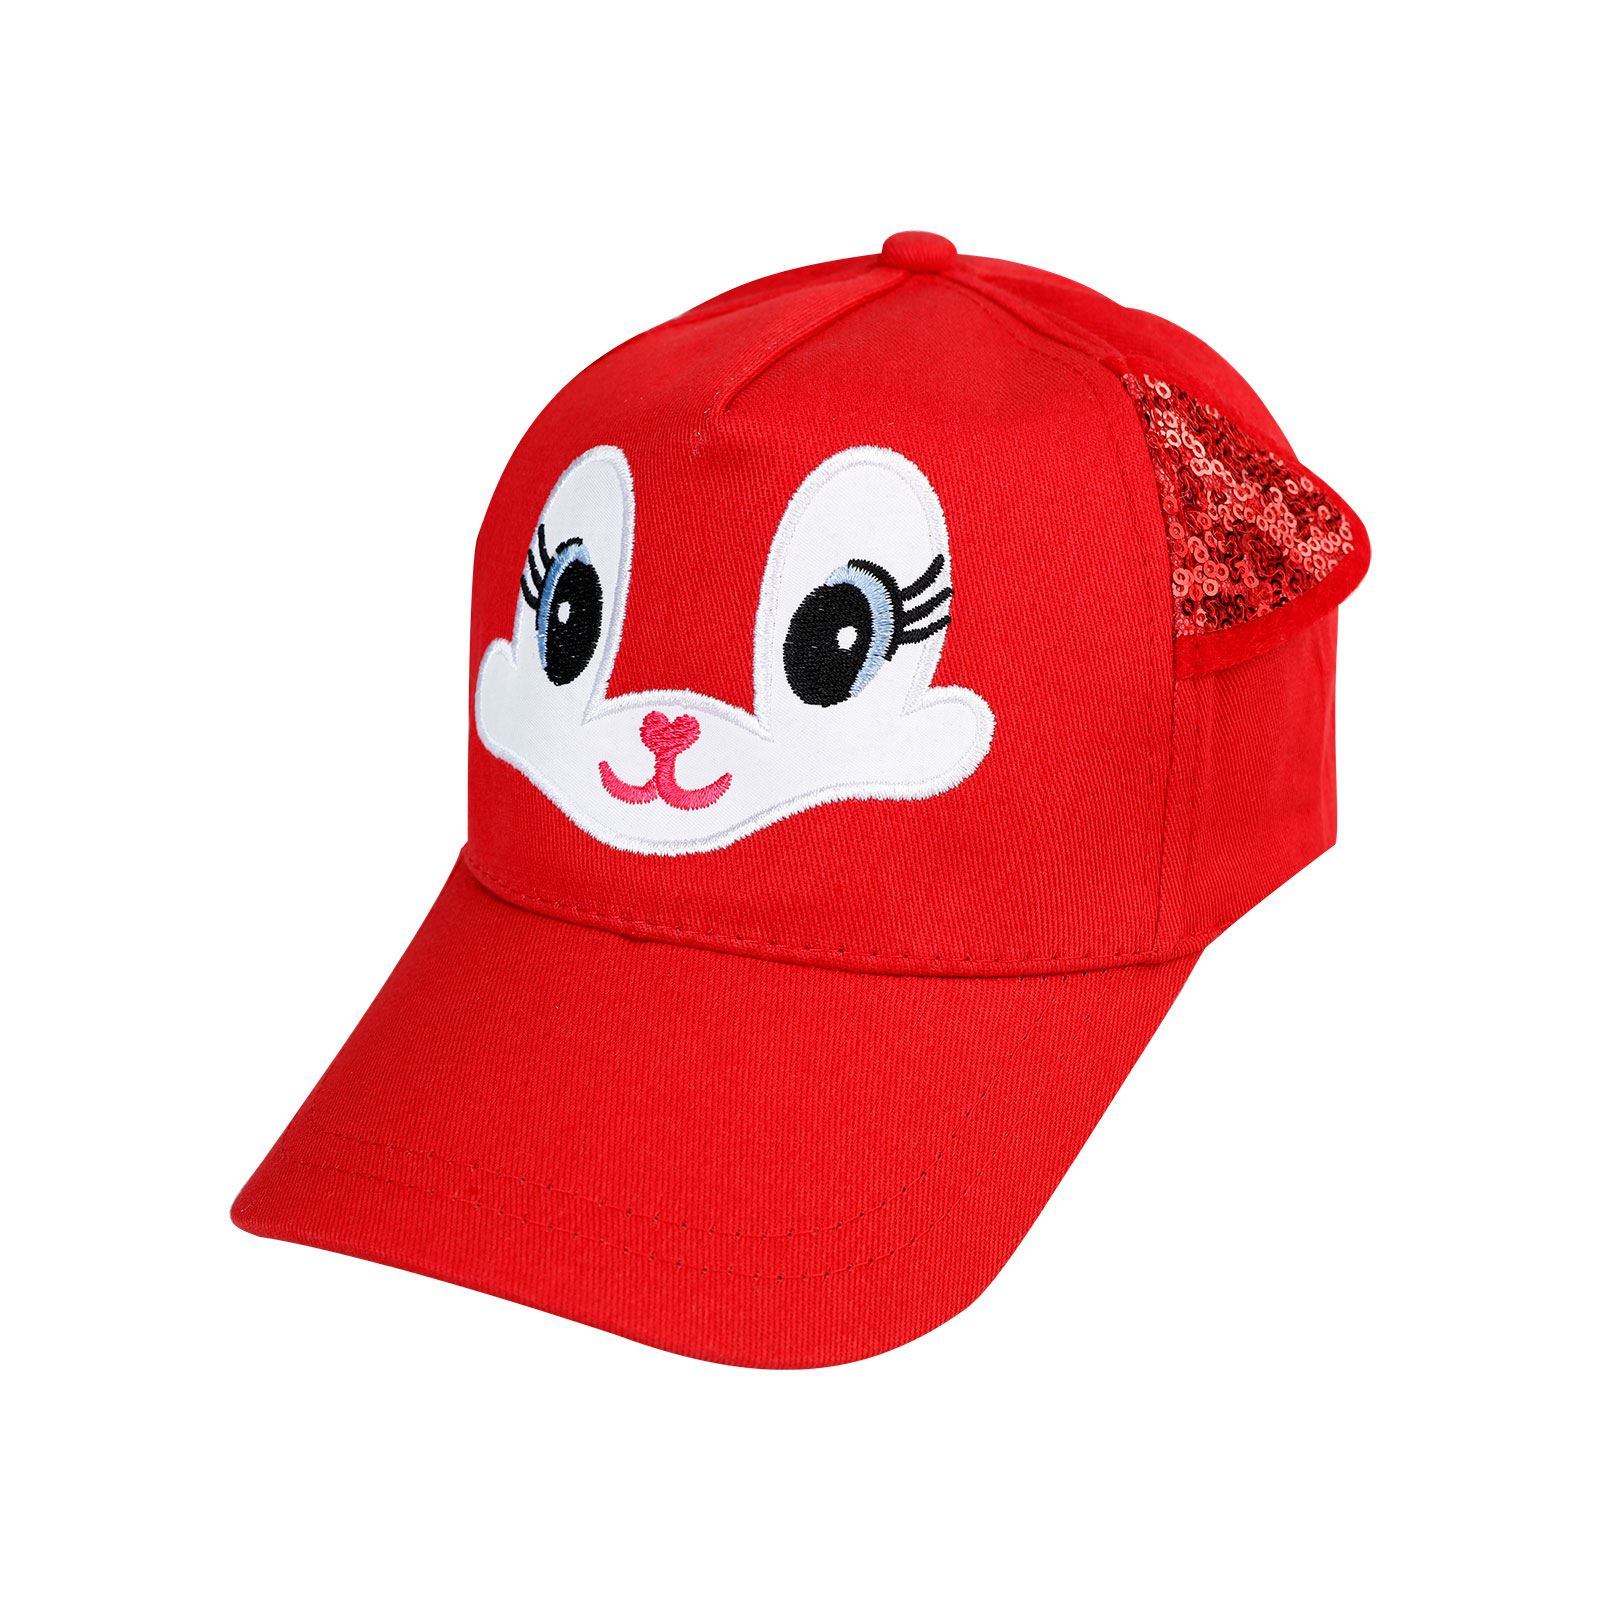 Tidi Kız Çocuk Şapka 1-3 Yaş Kırmızı